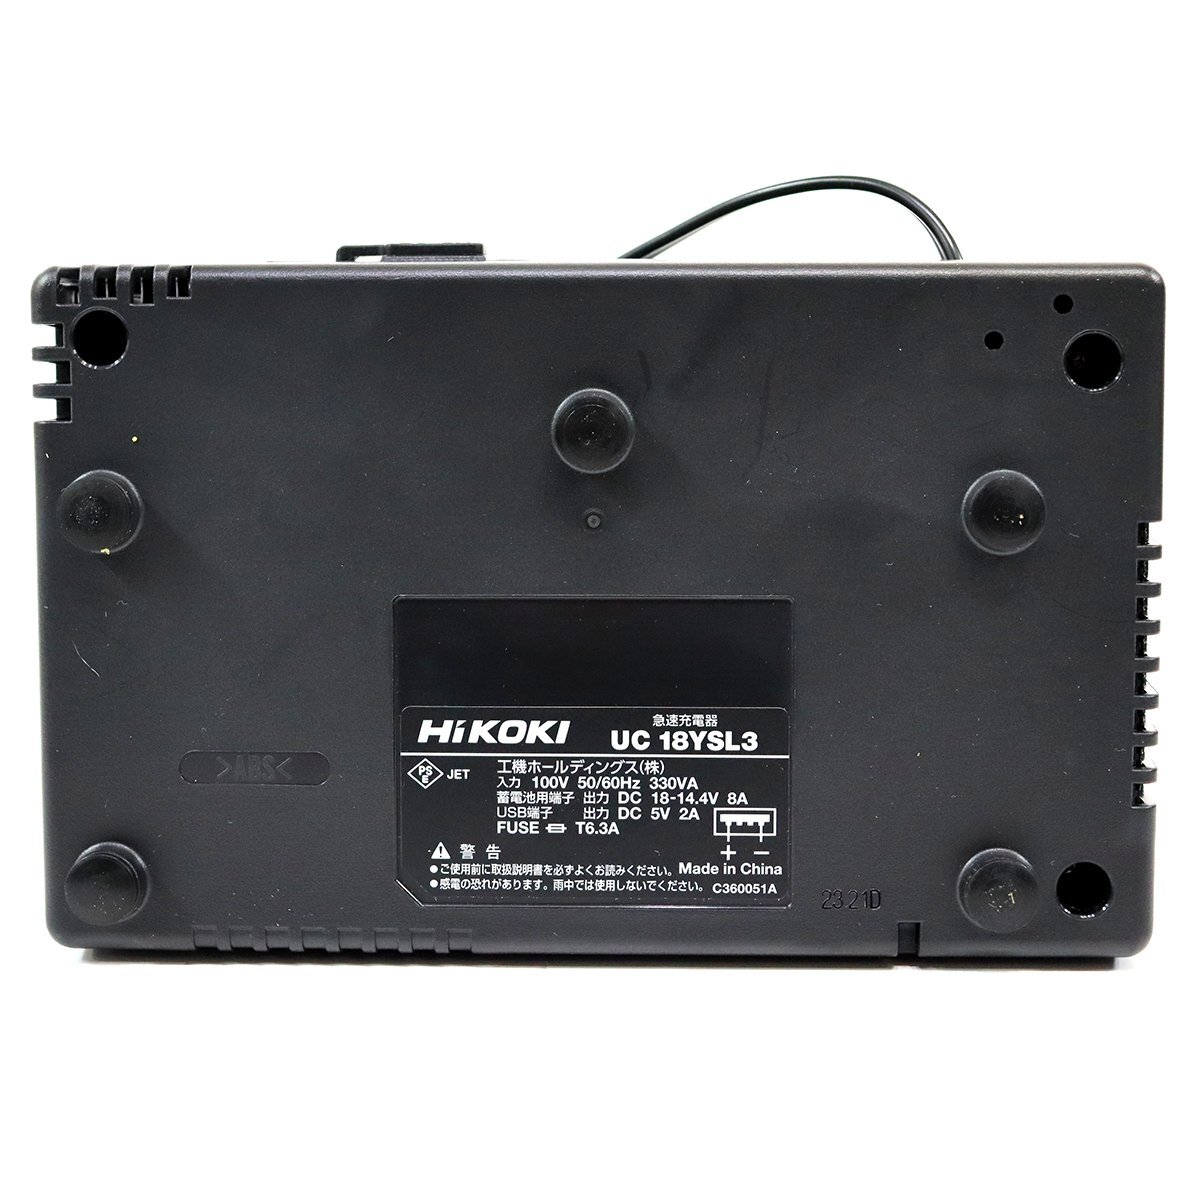 {L09287}HiKOKI ( high ko-ki) WH18DC(XCB) 18V cordless impact driver battery 1 piece model unused goods *